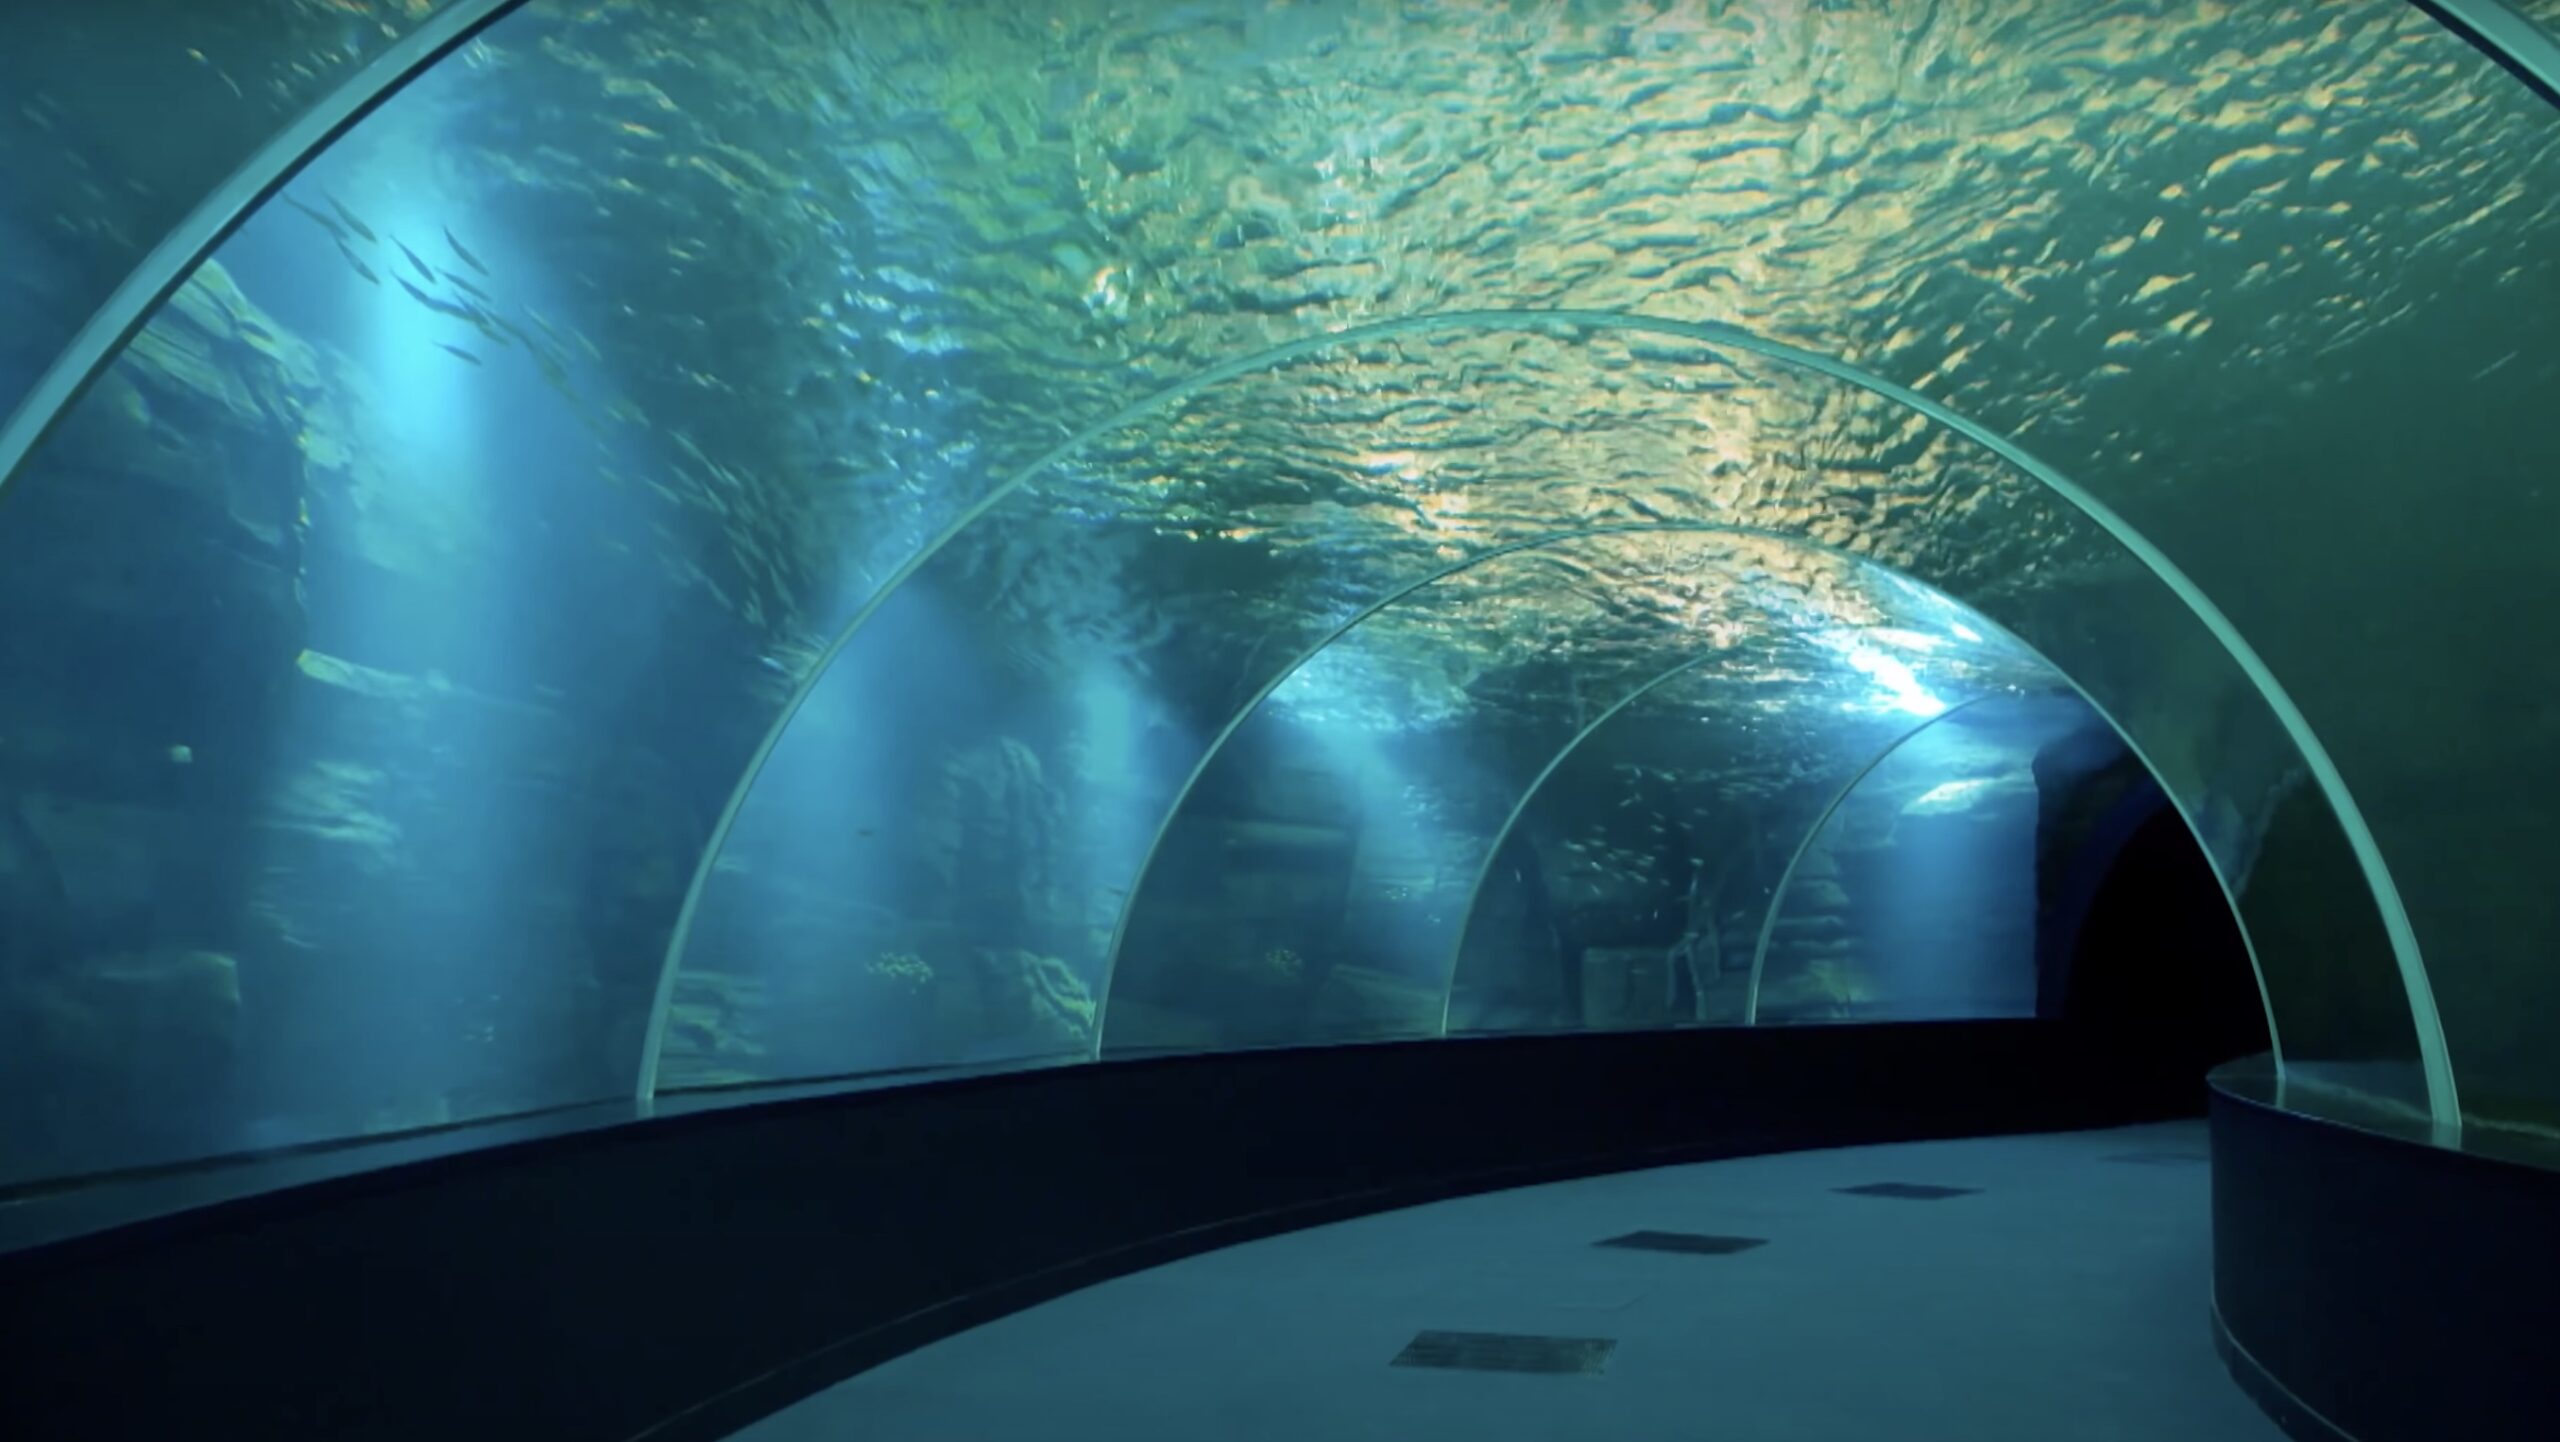 tunel led lys offentligt akvarium